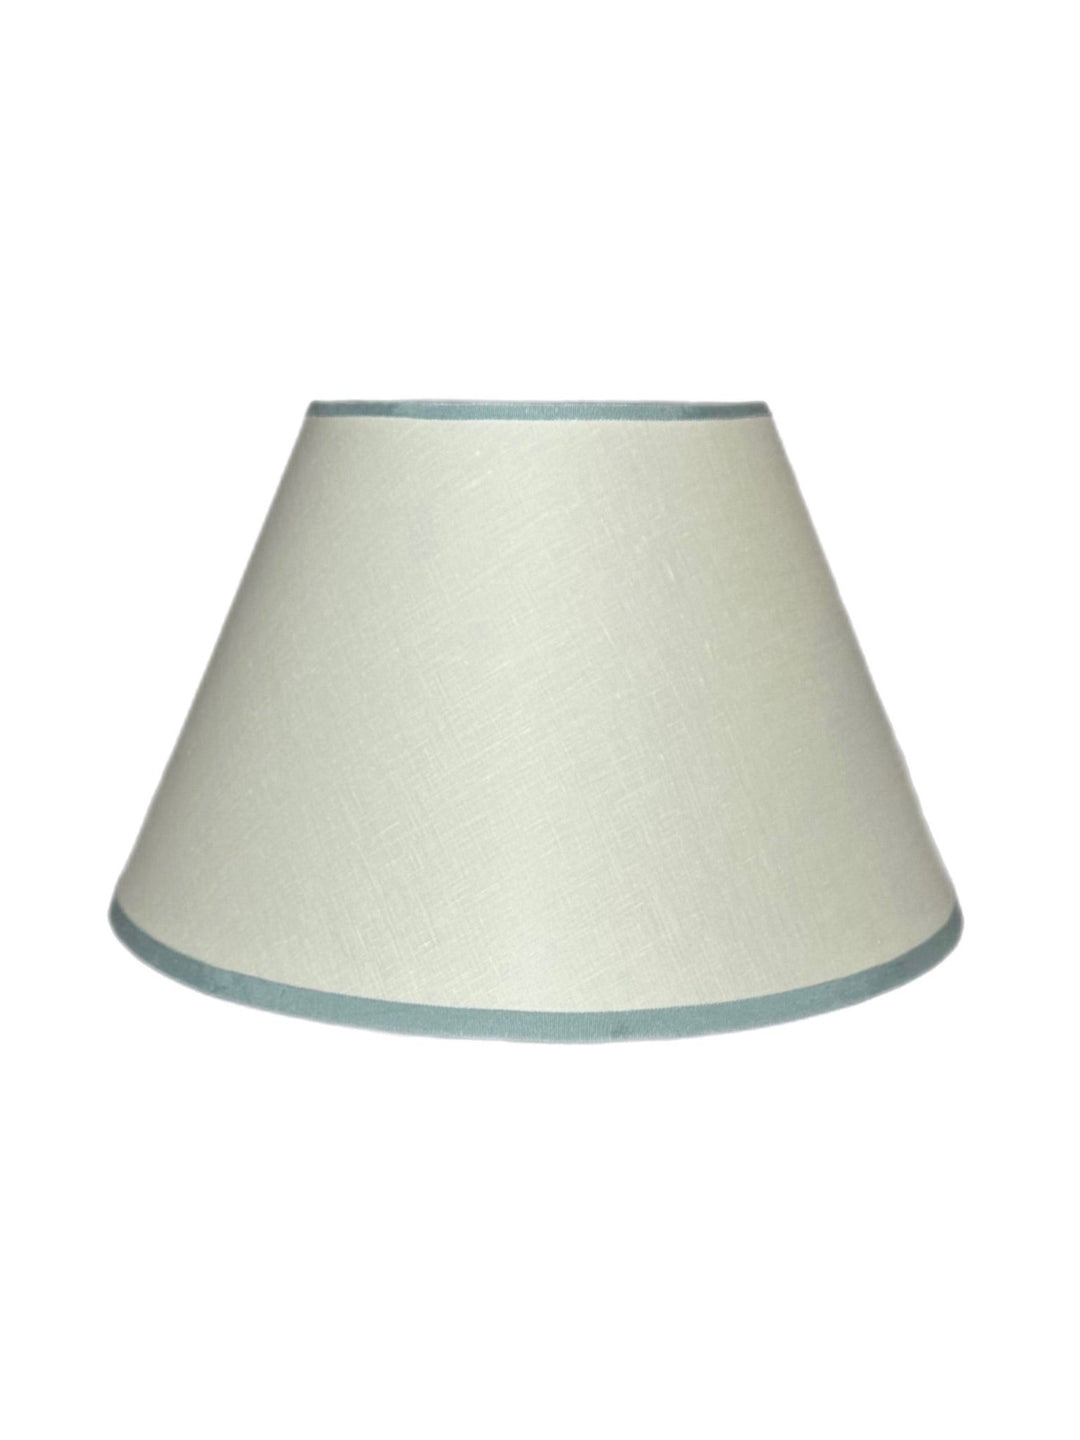 Linen Empire Lamp Shade: 6 Sizes